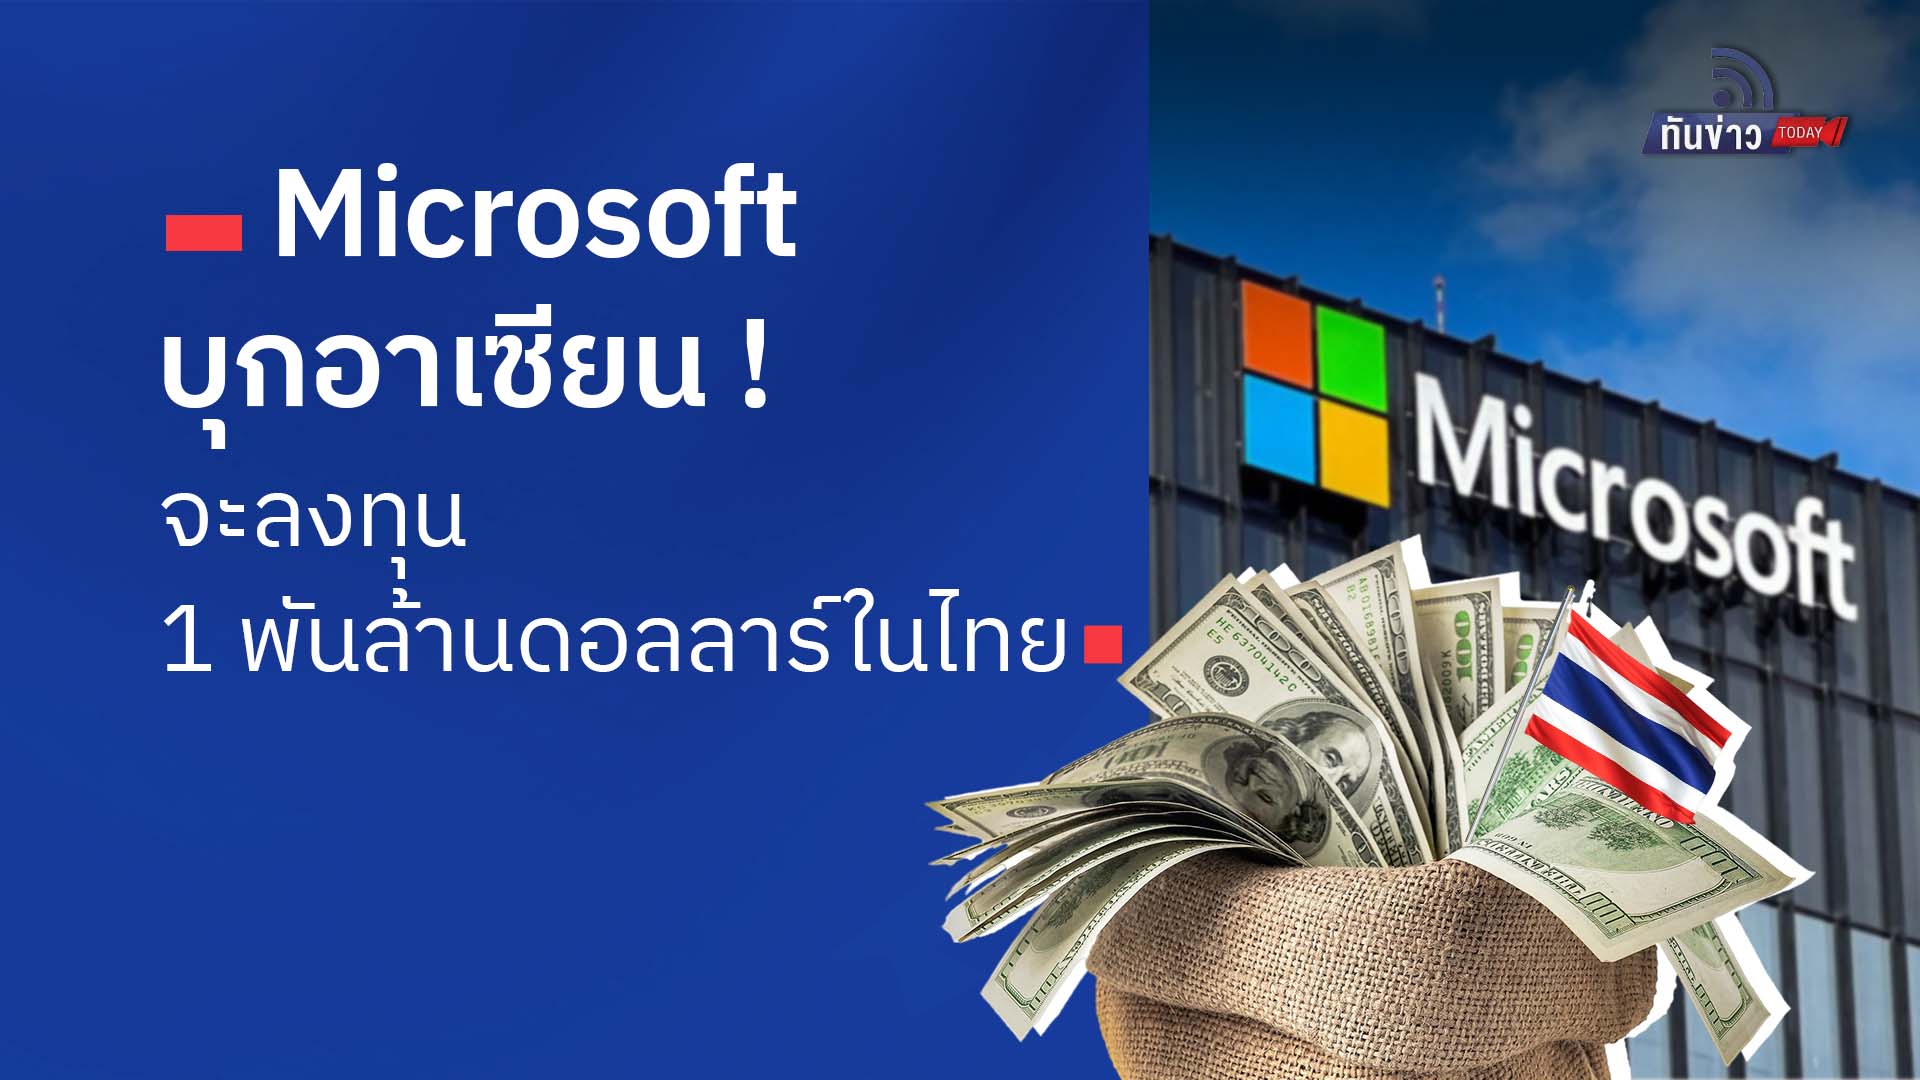 “Microsoft บุกอาเซียน จะลงทุน 1 พันล้านดอลลาร์ในไทย